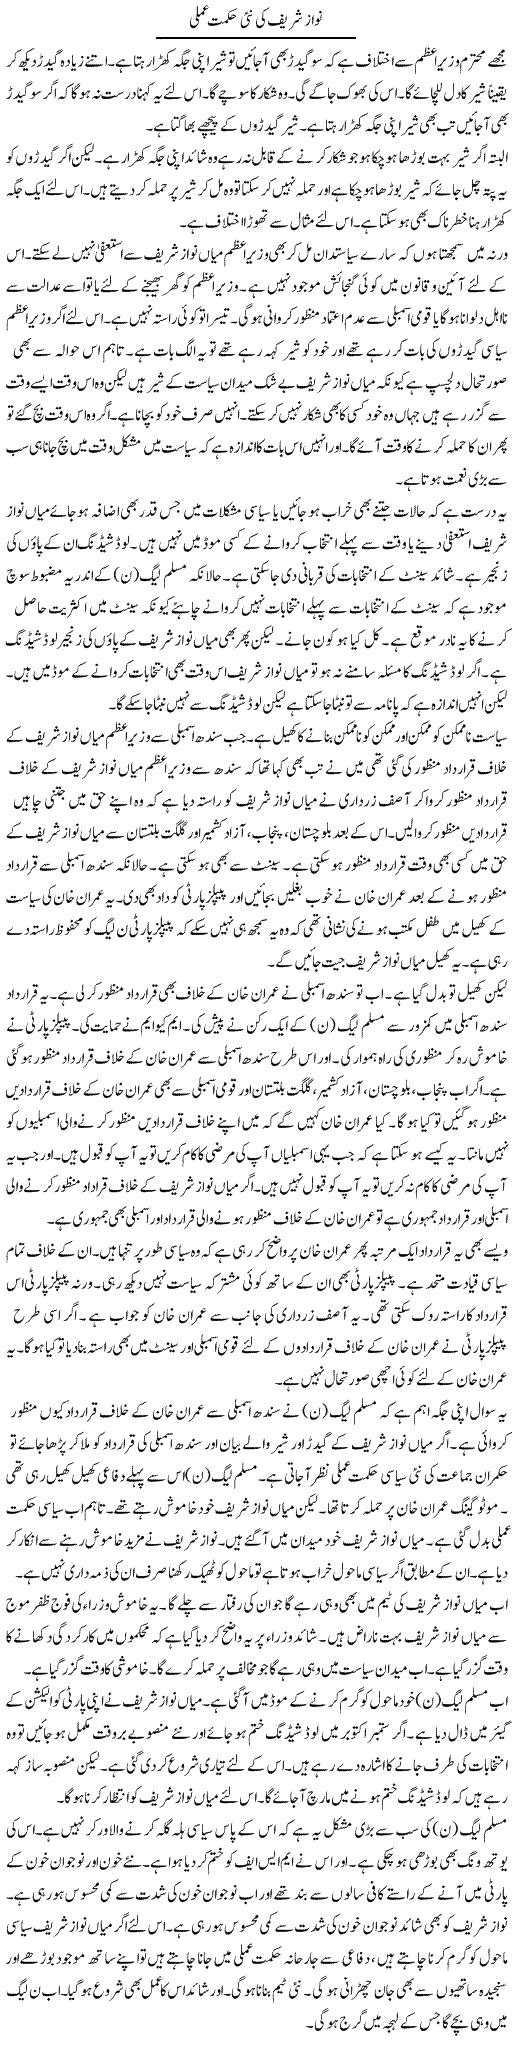 Nawaz Shareef Ki Nai Hikmat e Amli | Muzamal Suharwardy | Daily Urdu Columns